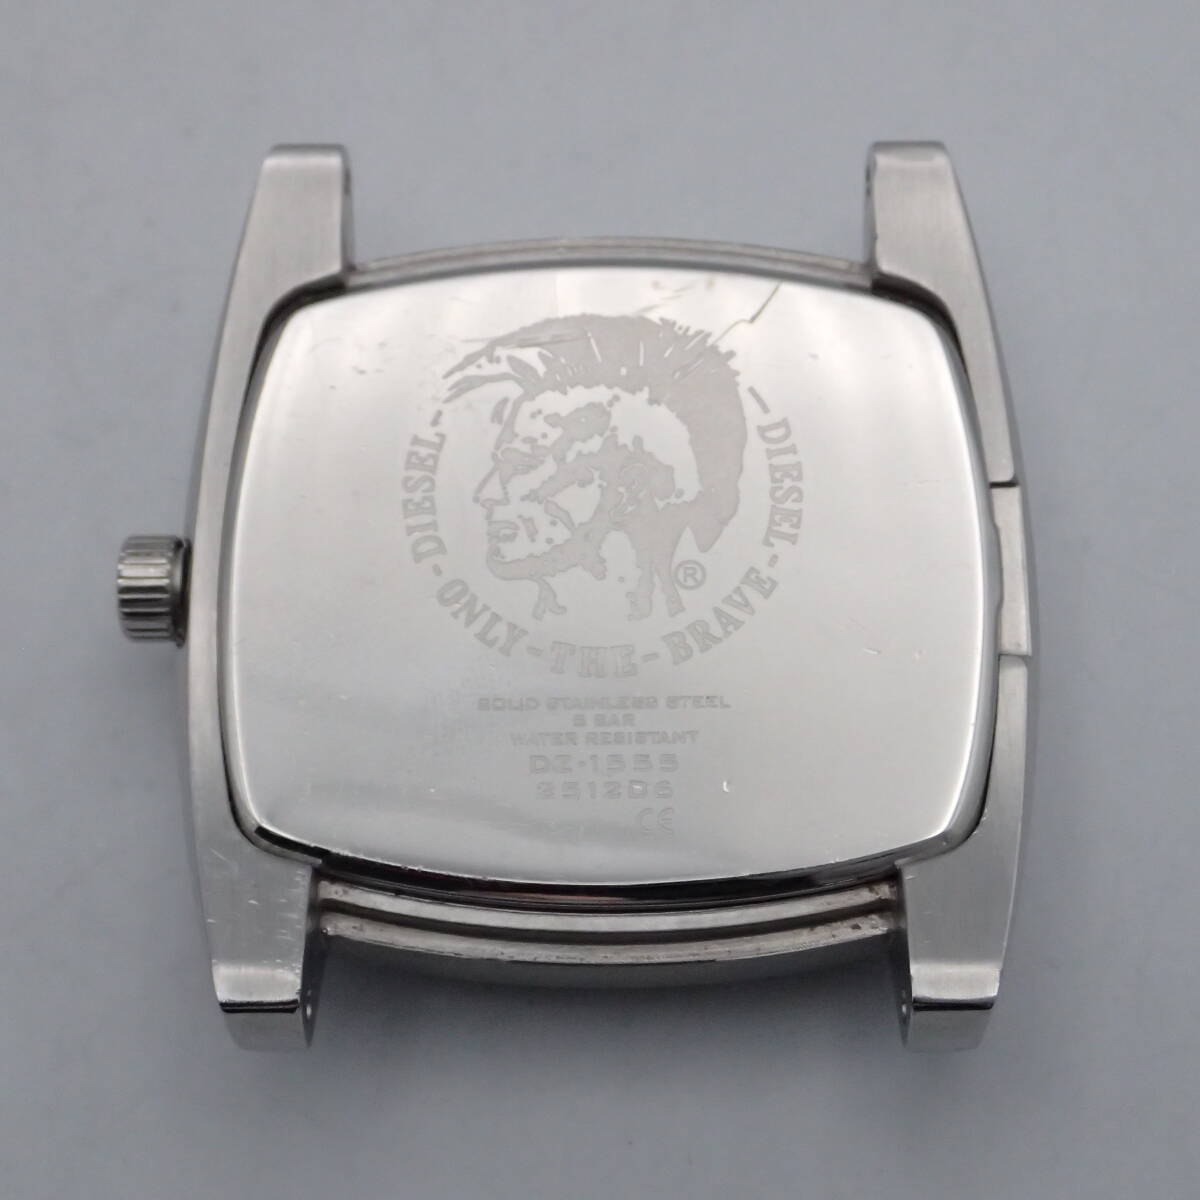 e02338/DIESEL diesel / quarts / men's wristwatch / body only / face silver /DZ-1555